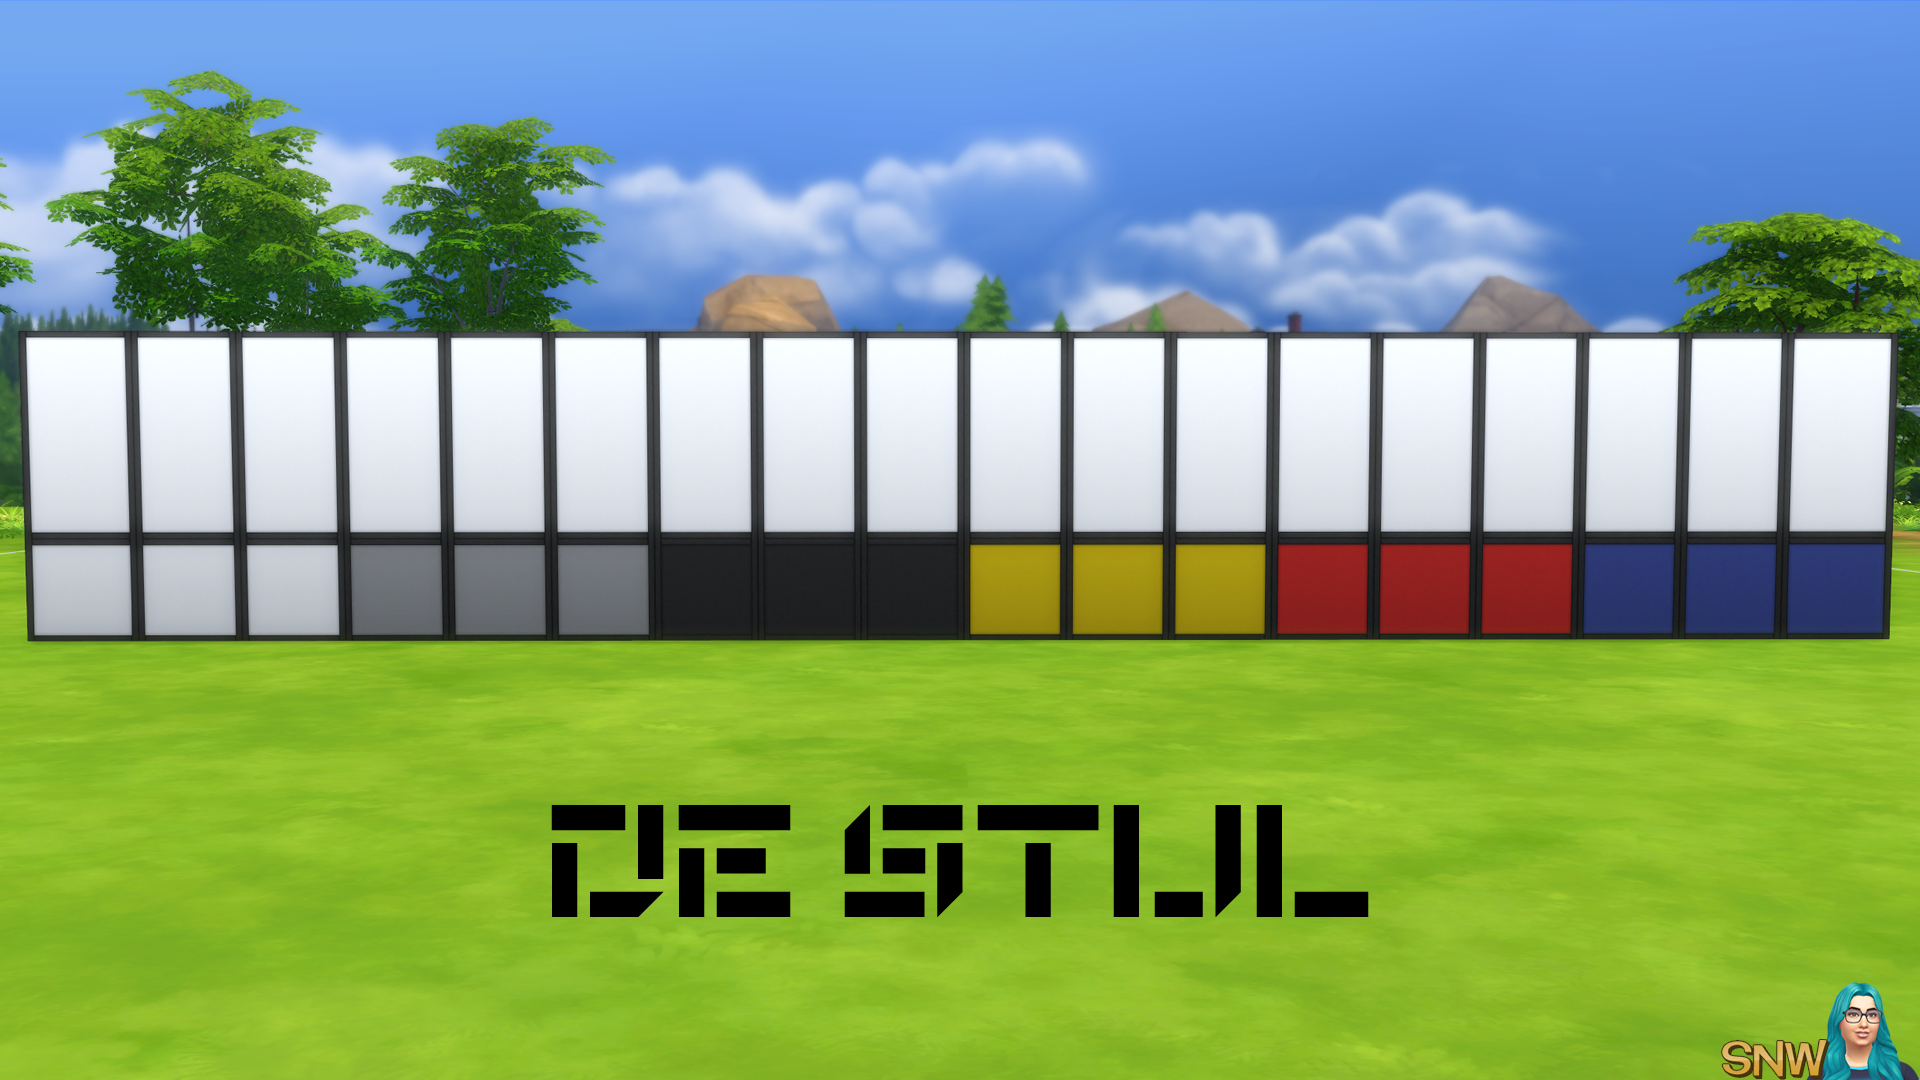 De Stijl Walls for The Sims 4